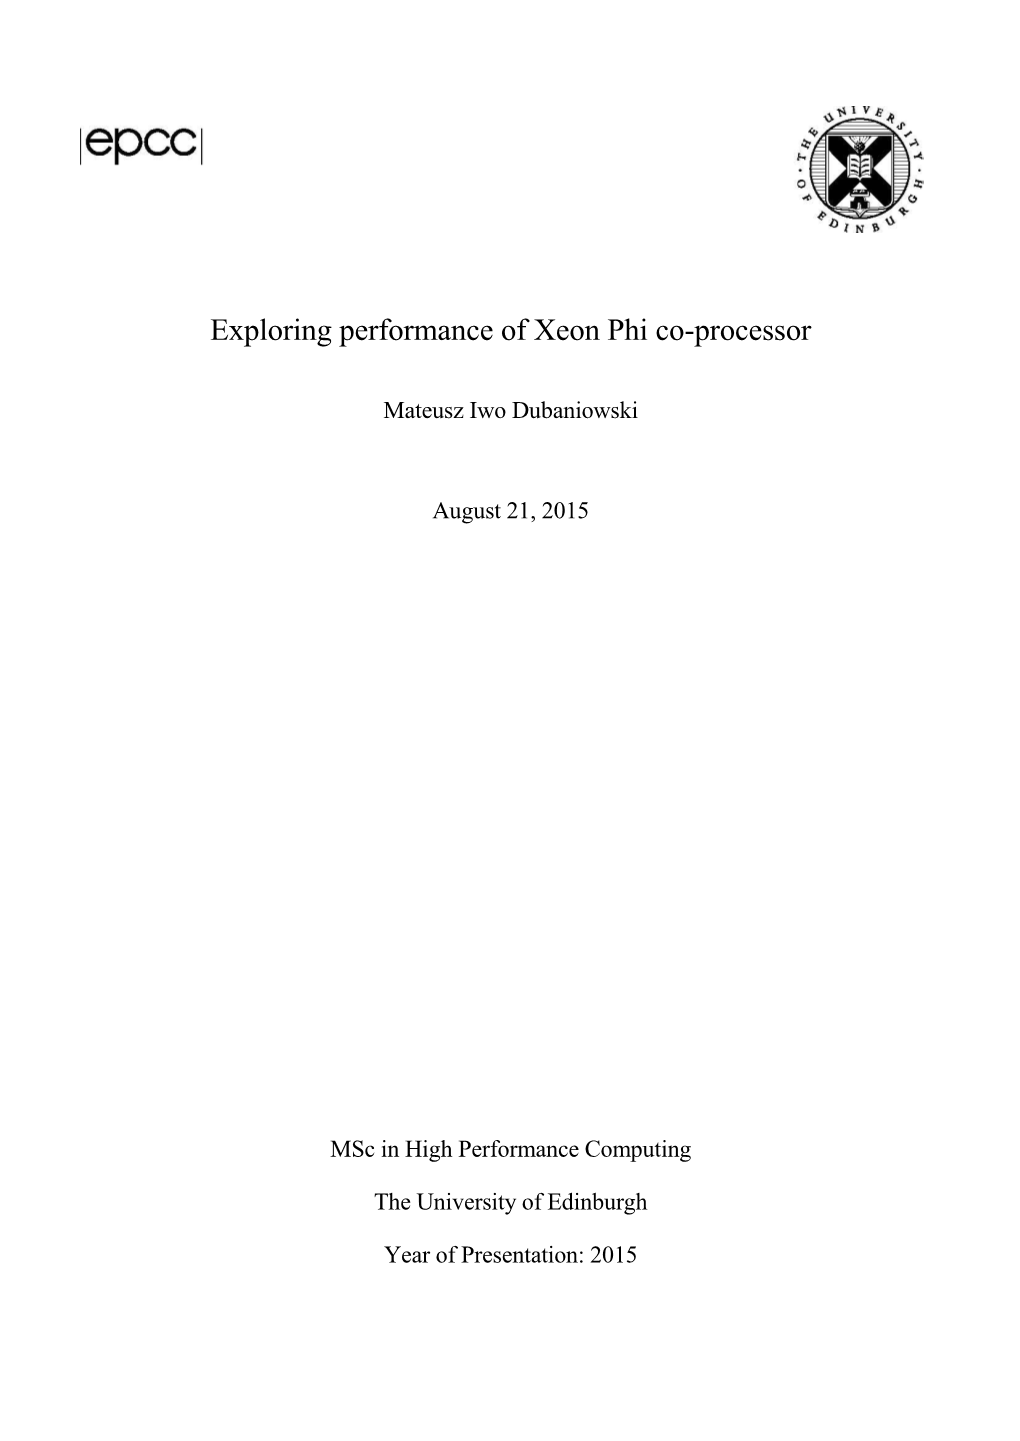 Exploring Performance of Xeon Phi Co-Processor